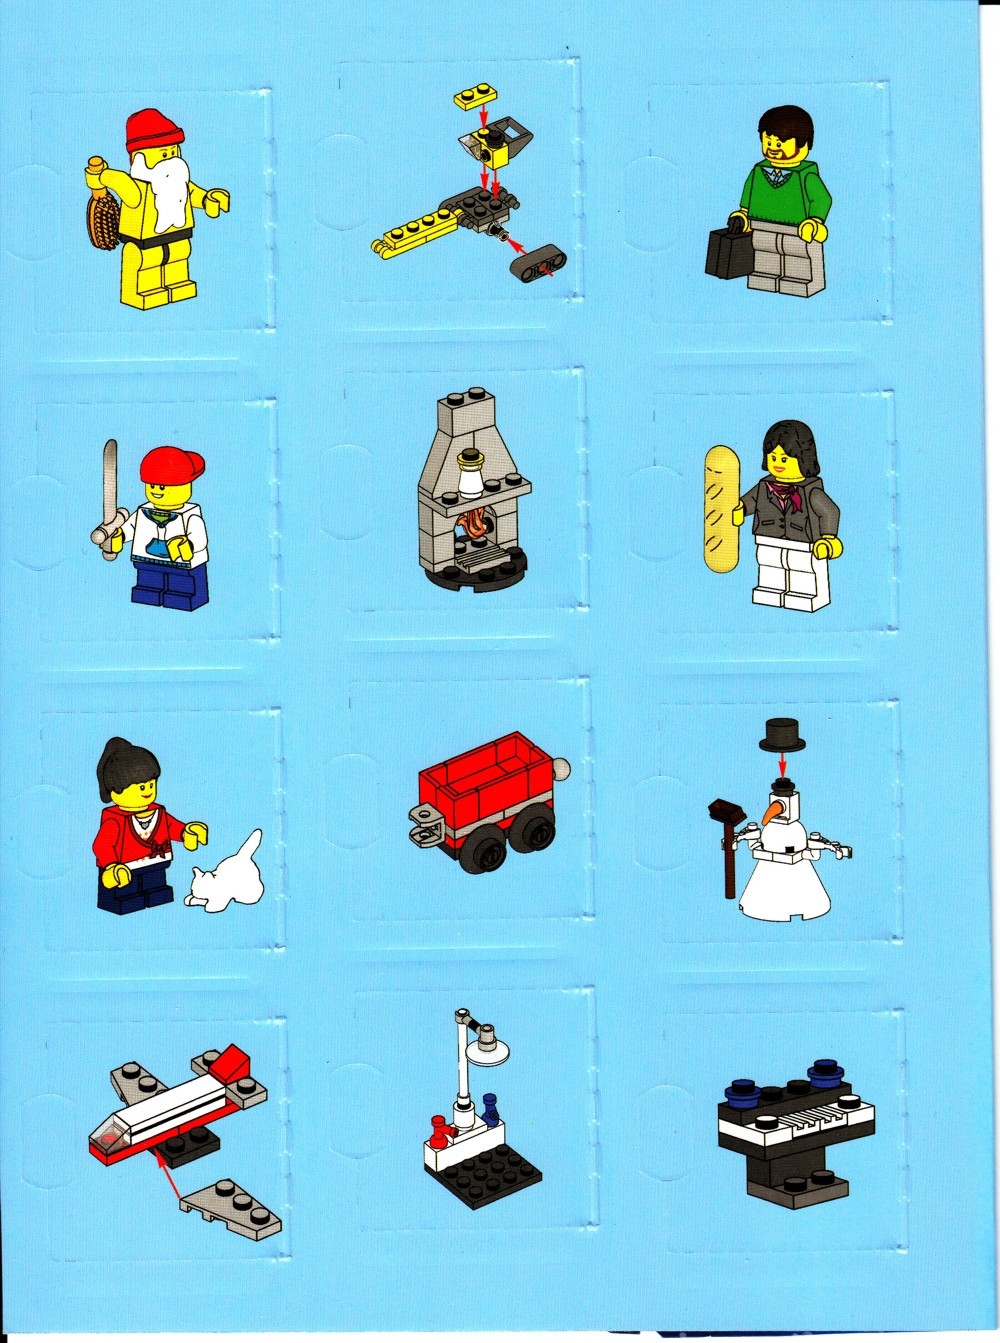 City Advent Calendar LEGO instructions and